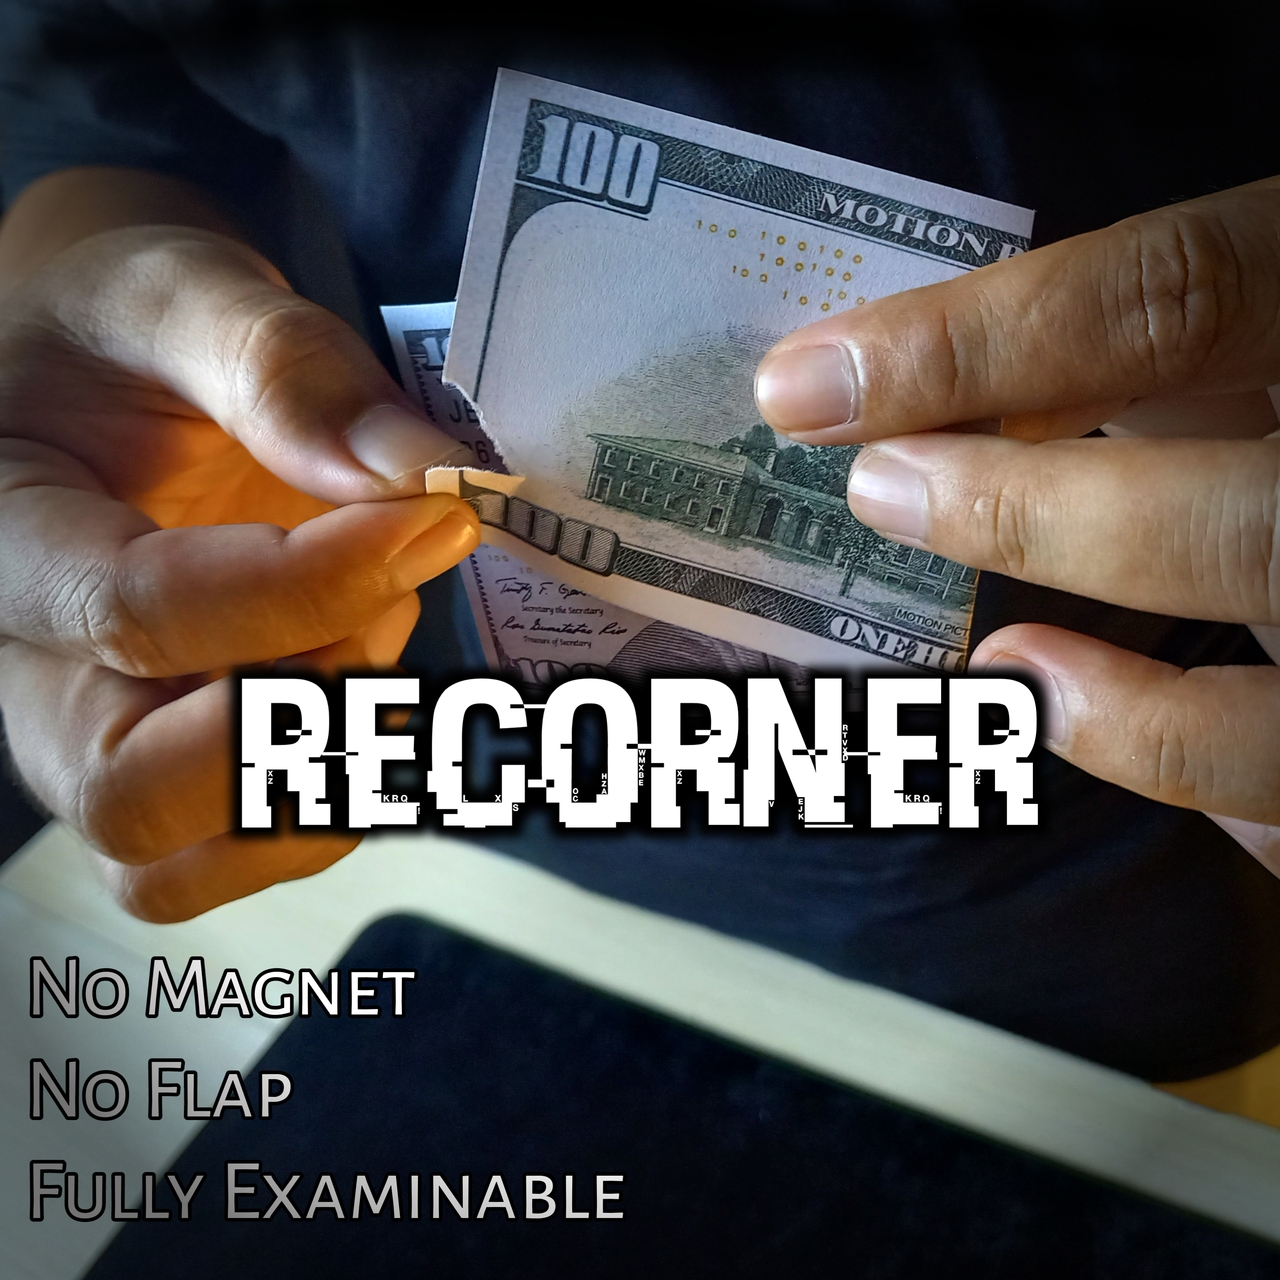 Recorner by Vix (Mp4 Video Download)